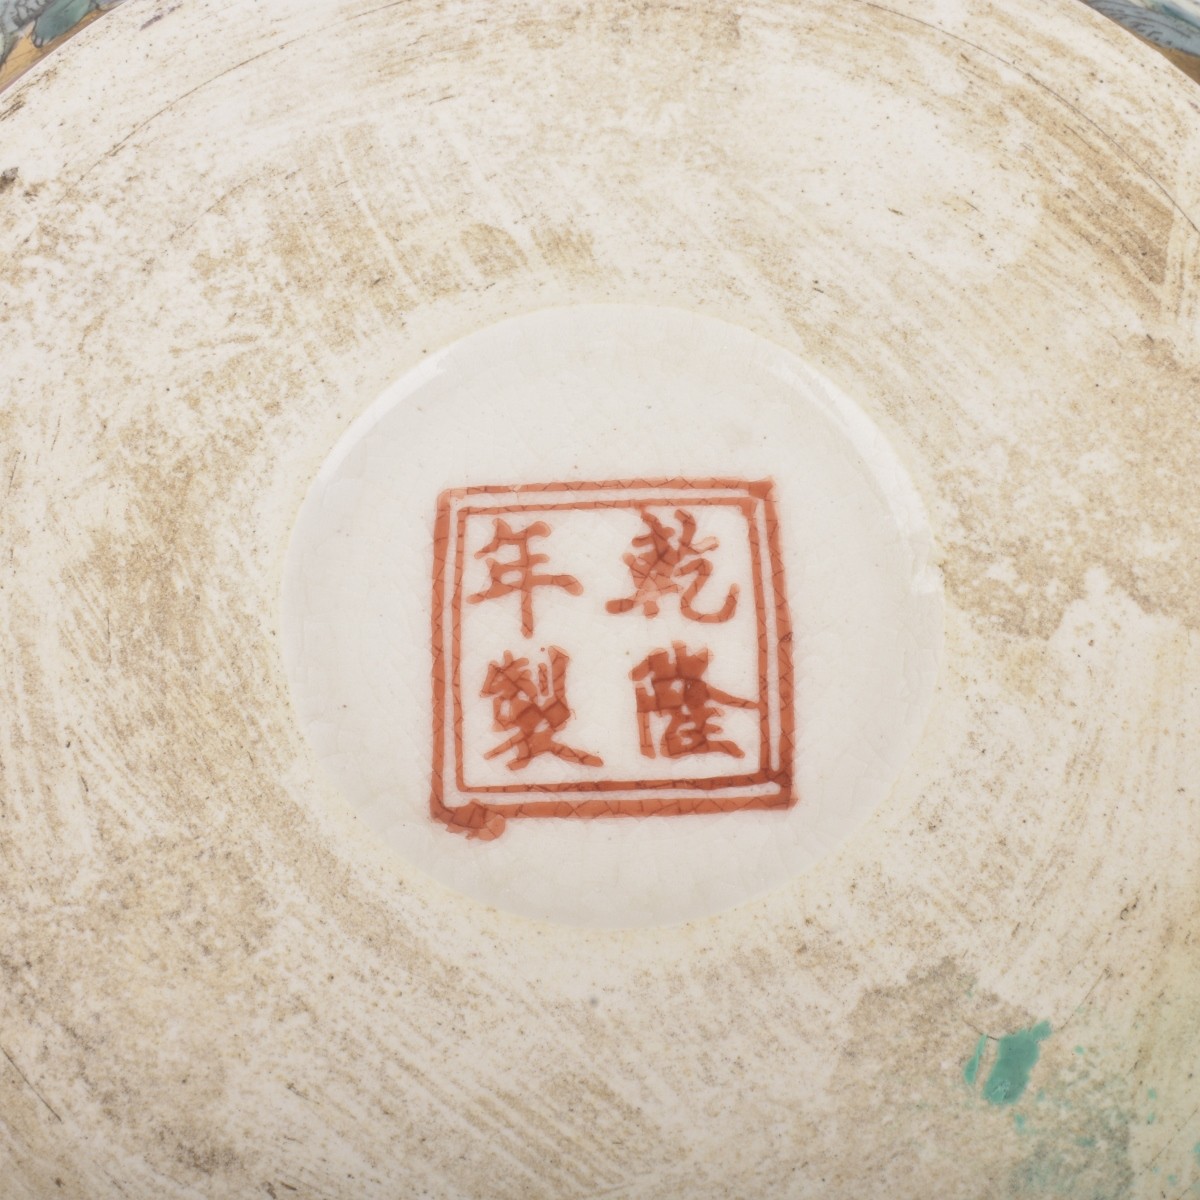 Chinese Bowls